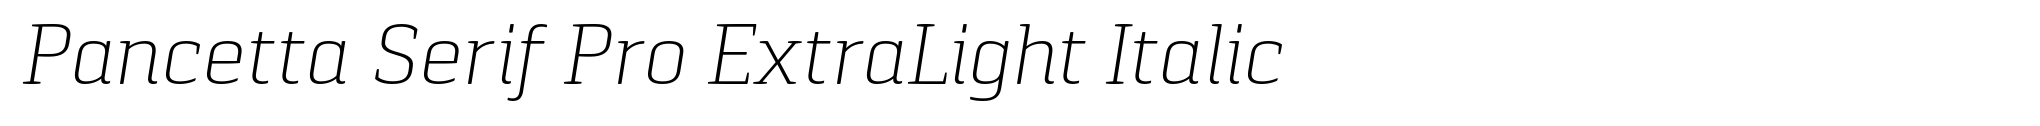 Pancetta Serif Pro ExtraLight Italic image